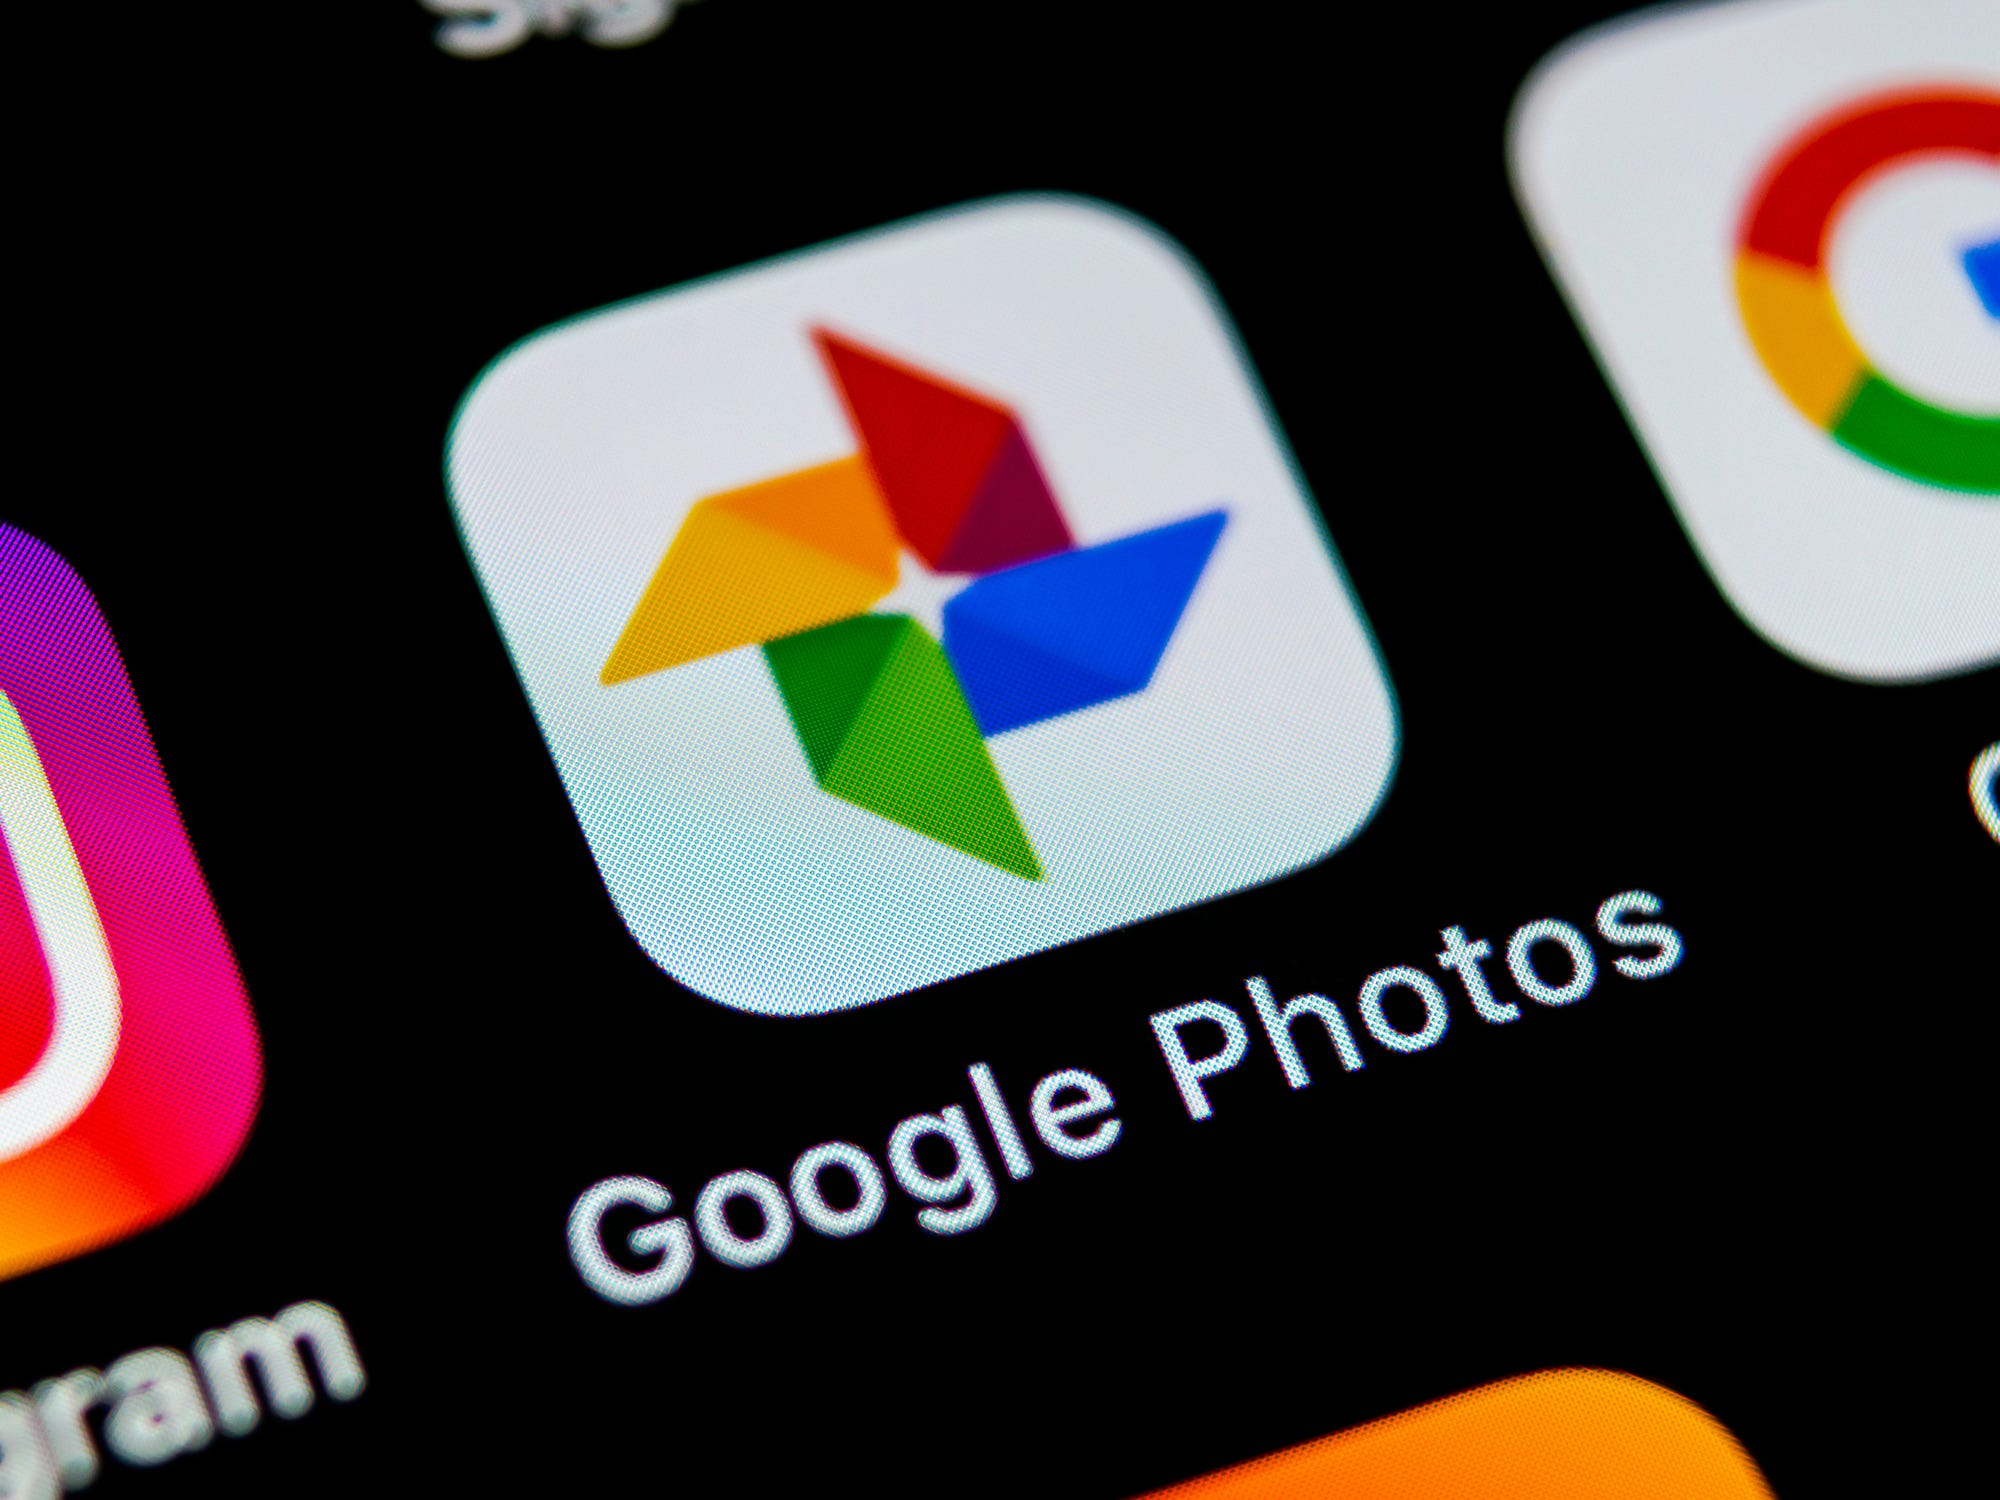 Google Photos Stops Unlimited Storage